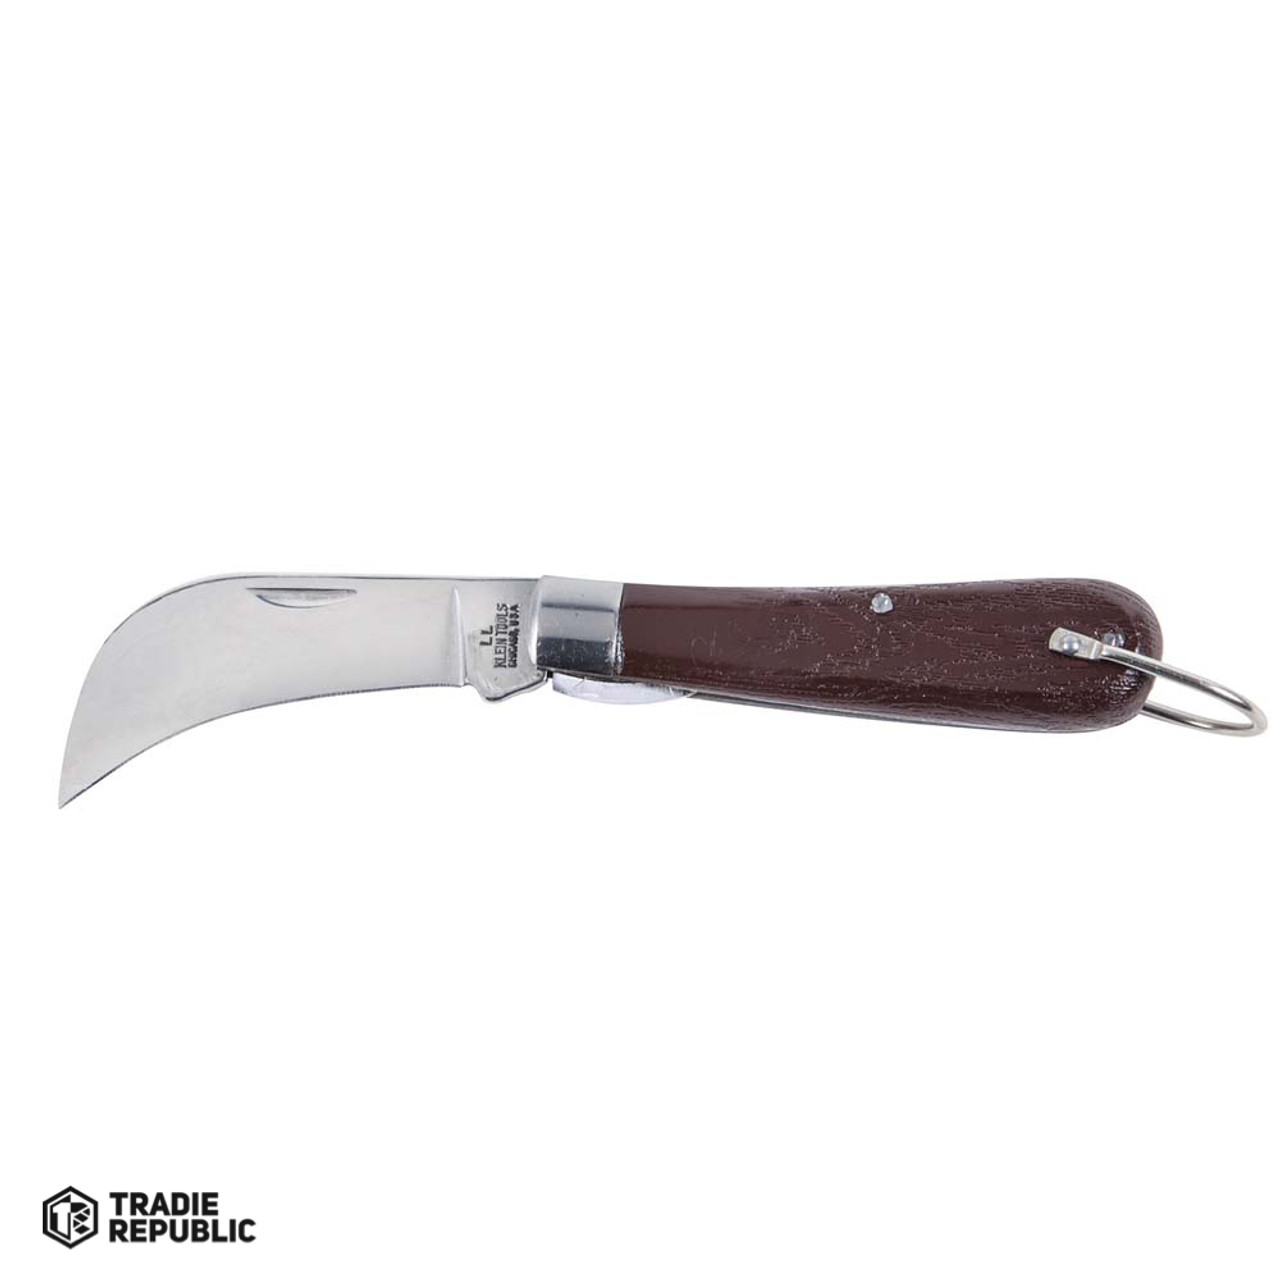 A-1550-4 Klein Knife 65mm SS Blade (Wooden Handle)